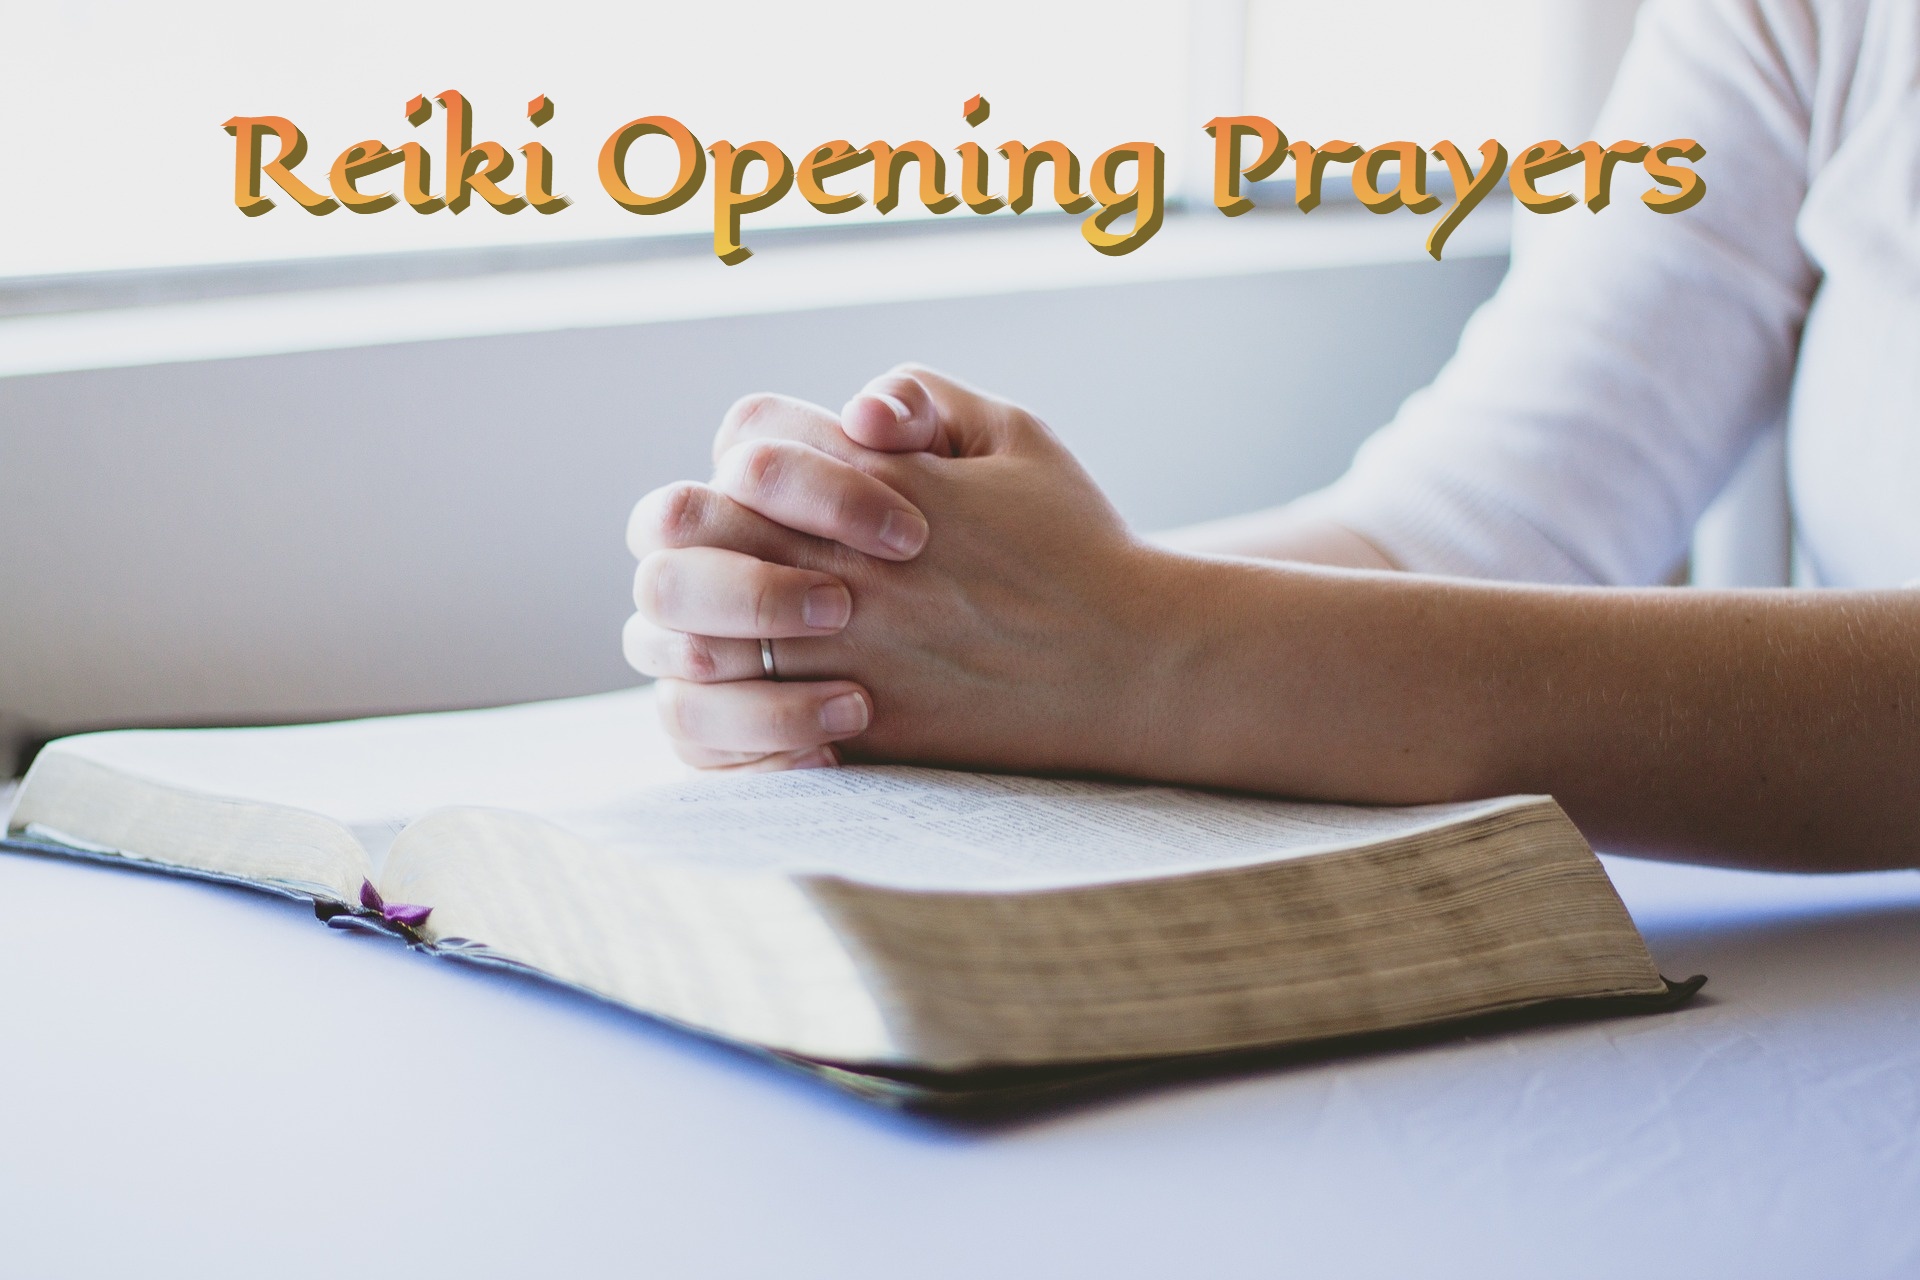 Reiki Opening Prayers - How They Work